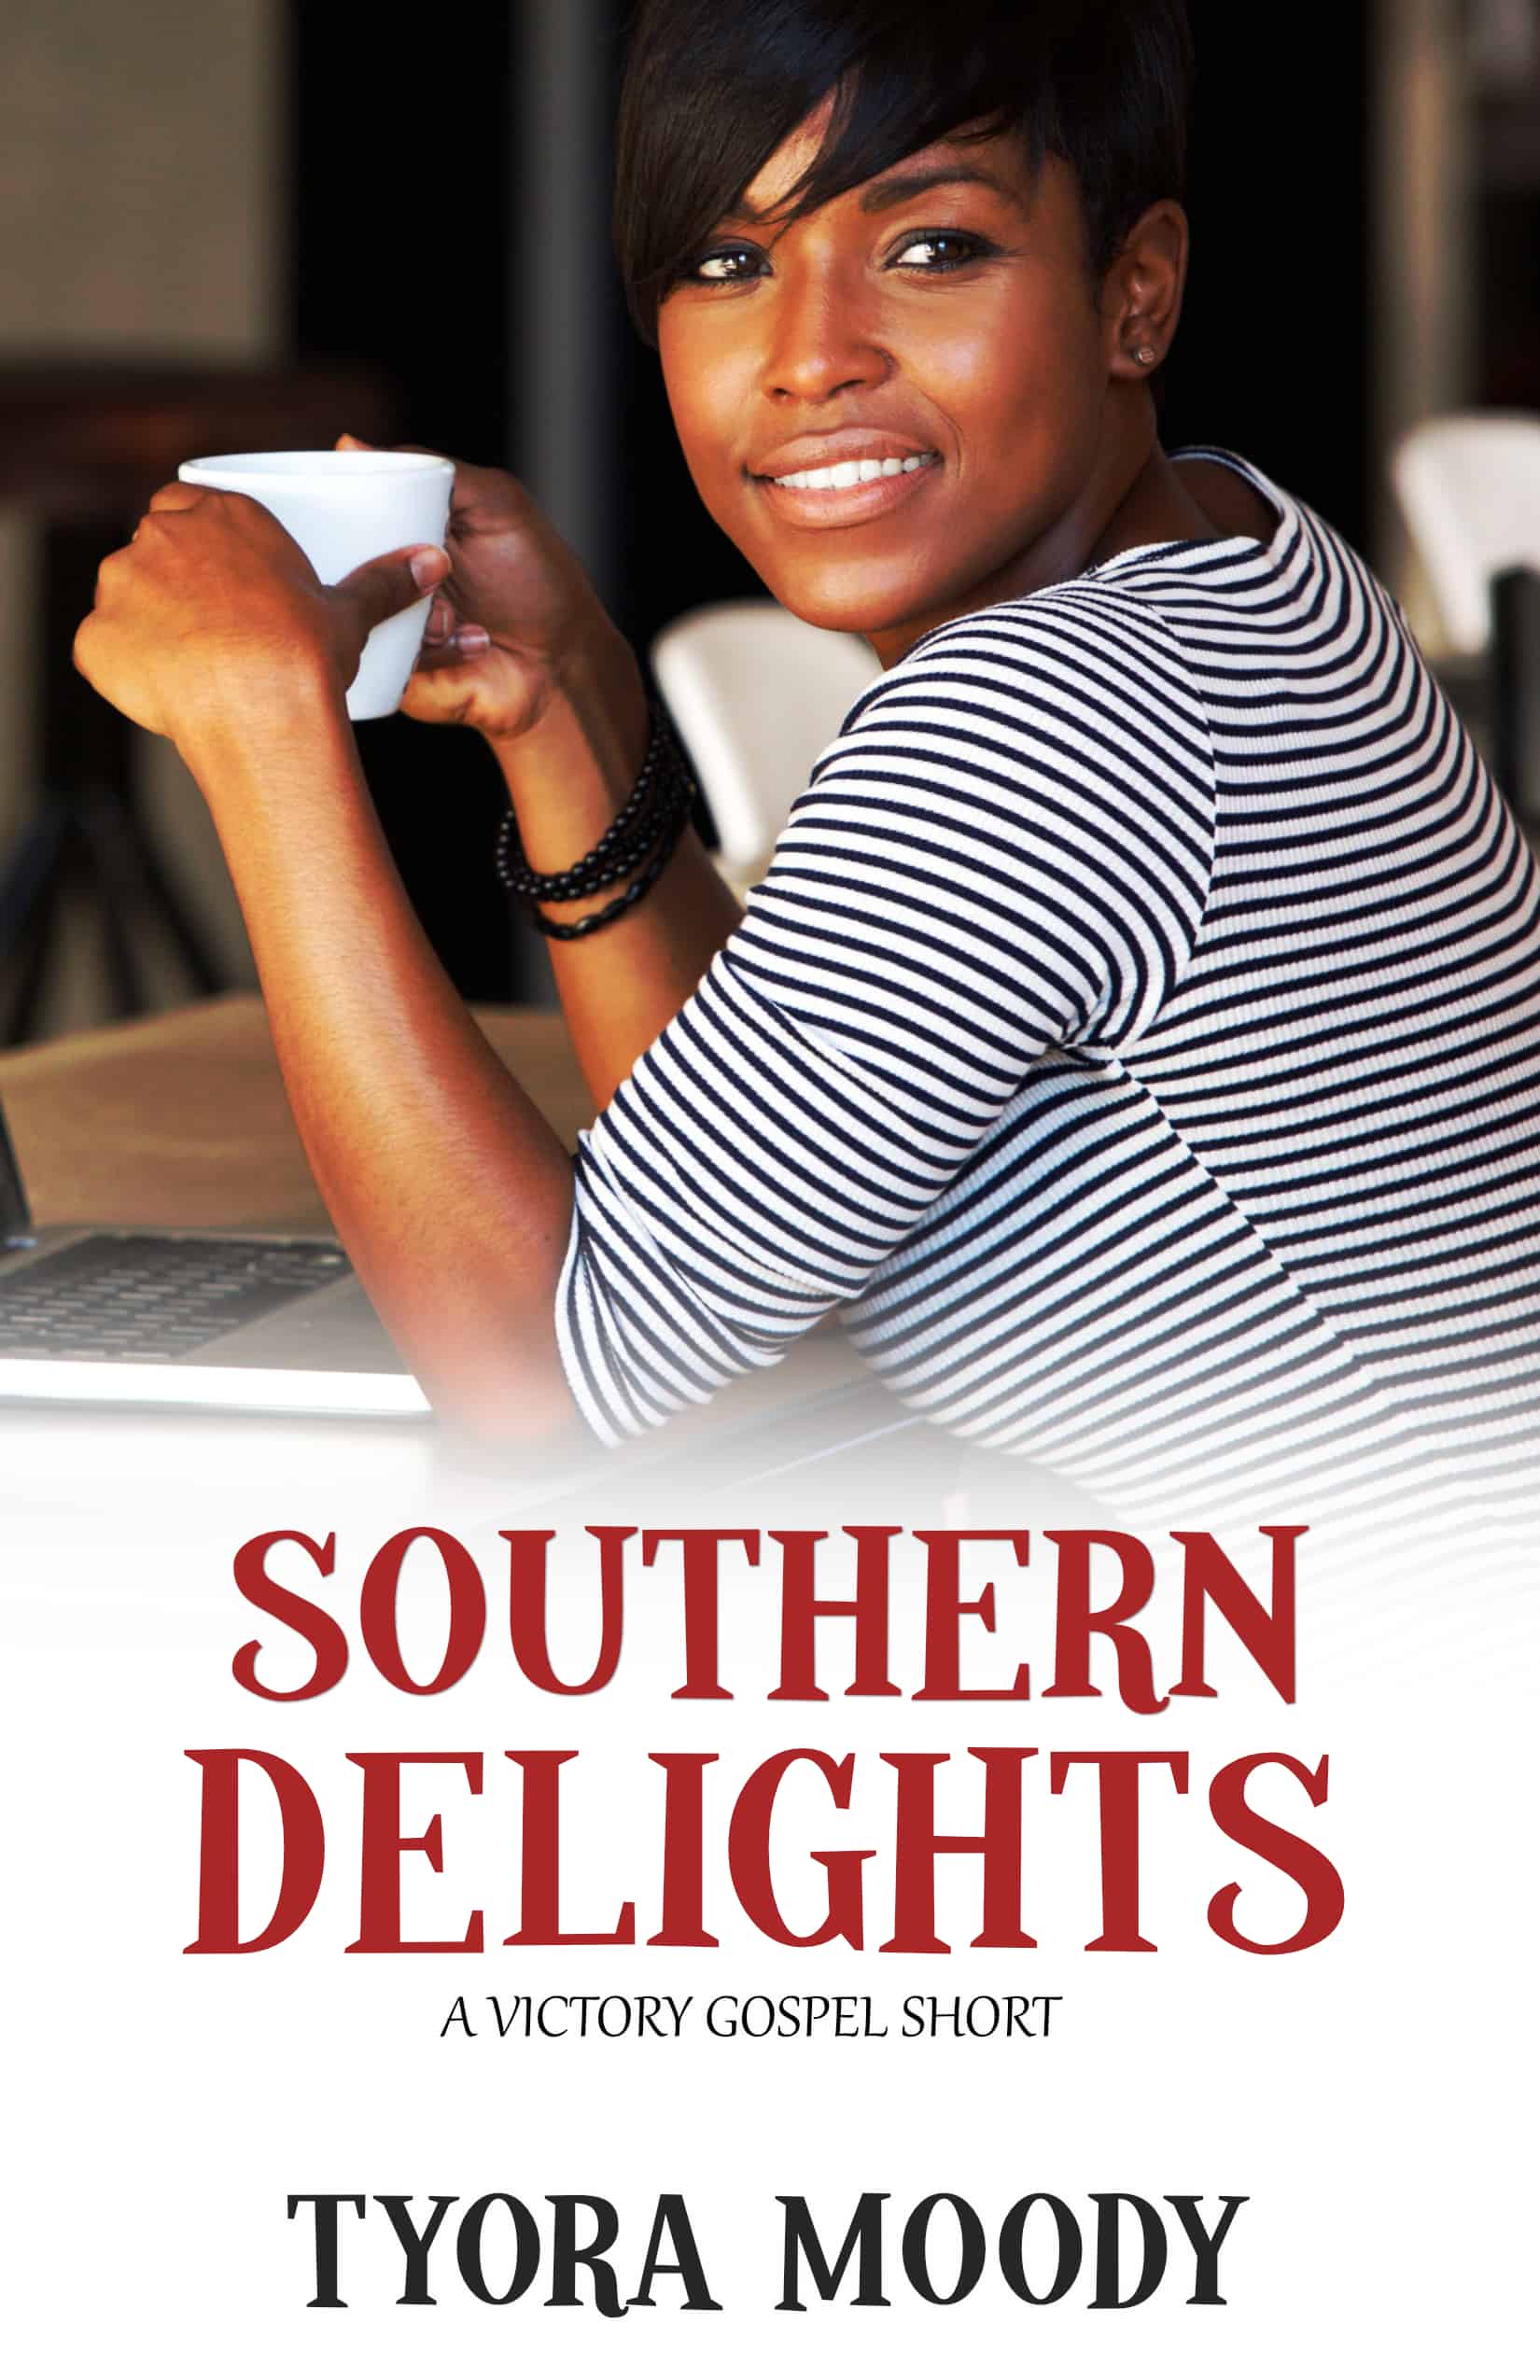 Southern Delights (Victory Gospel Short 2)